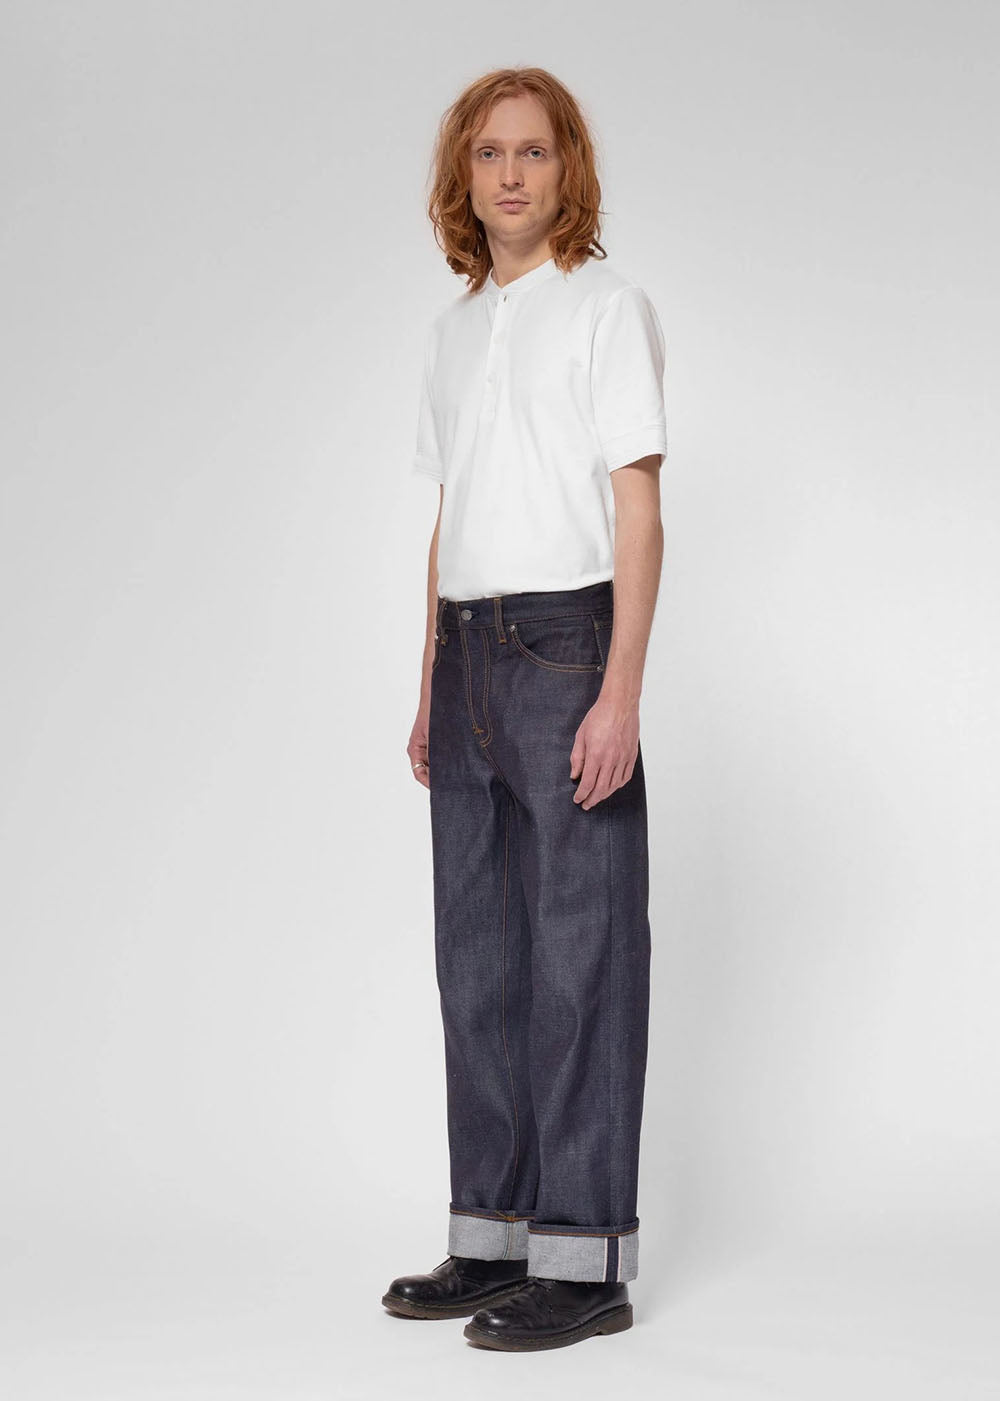 Short Sleeve Henley T-Shirt - Ecru - Nudie Jeans Canada - Danali